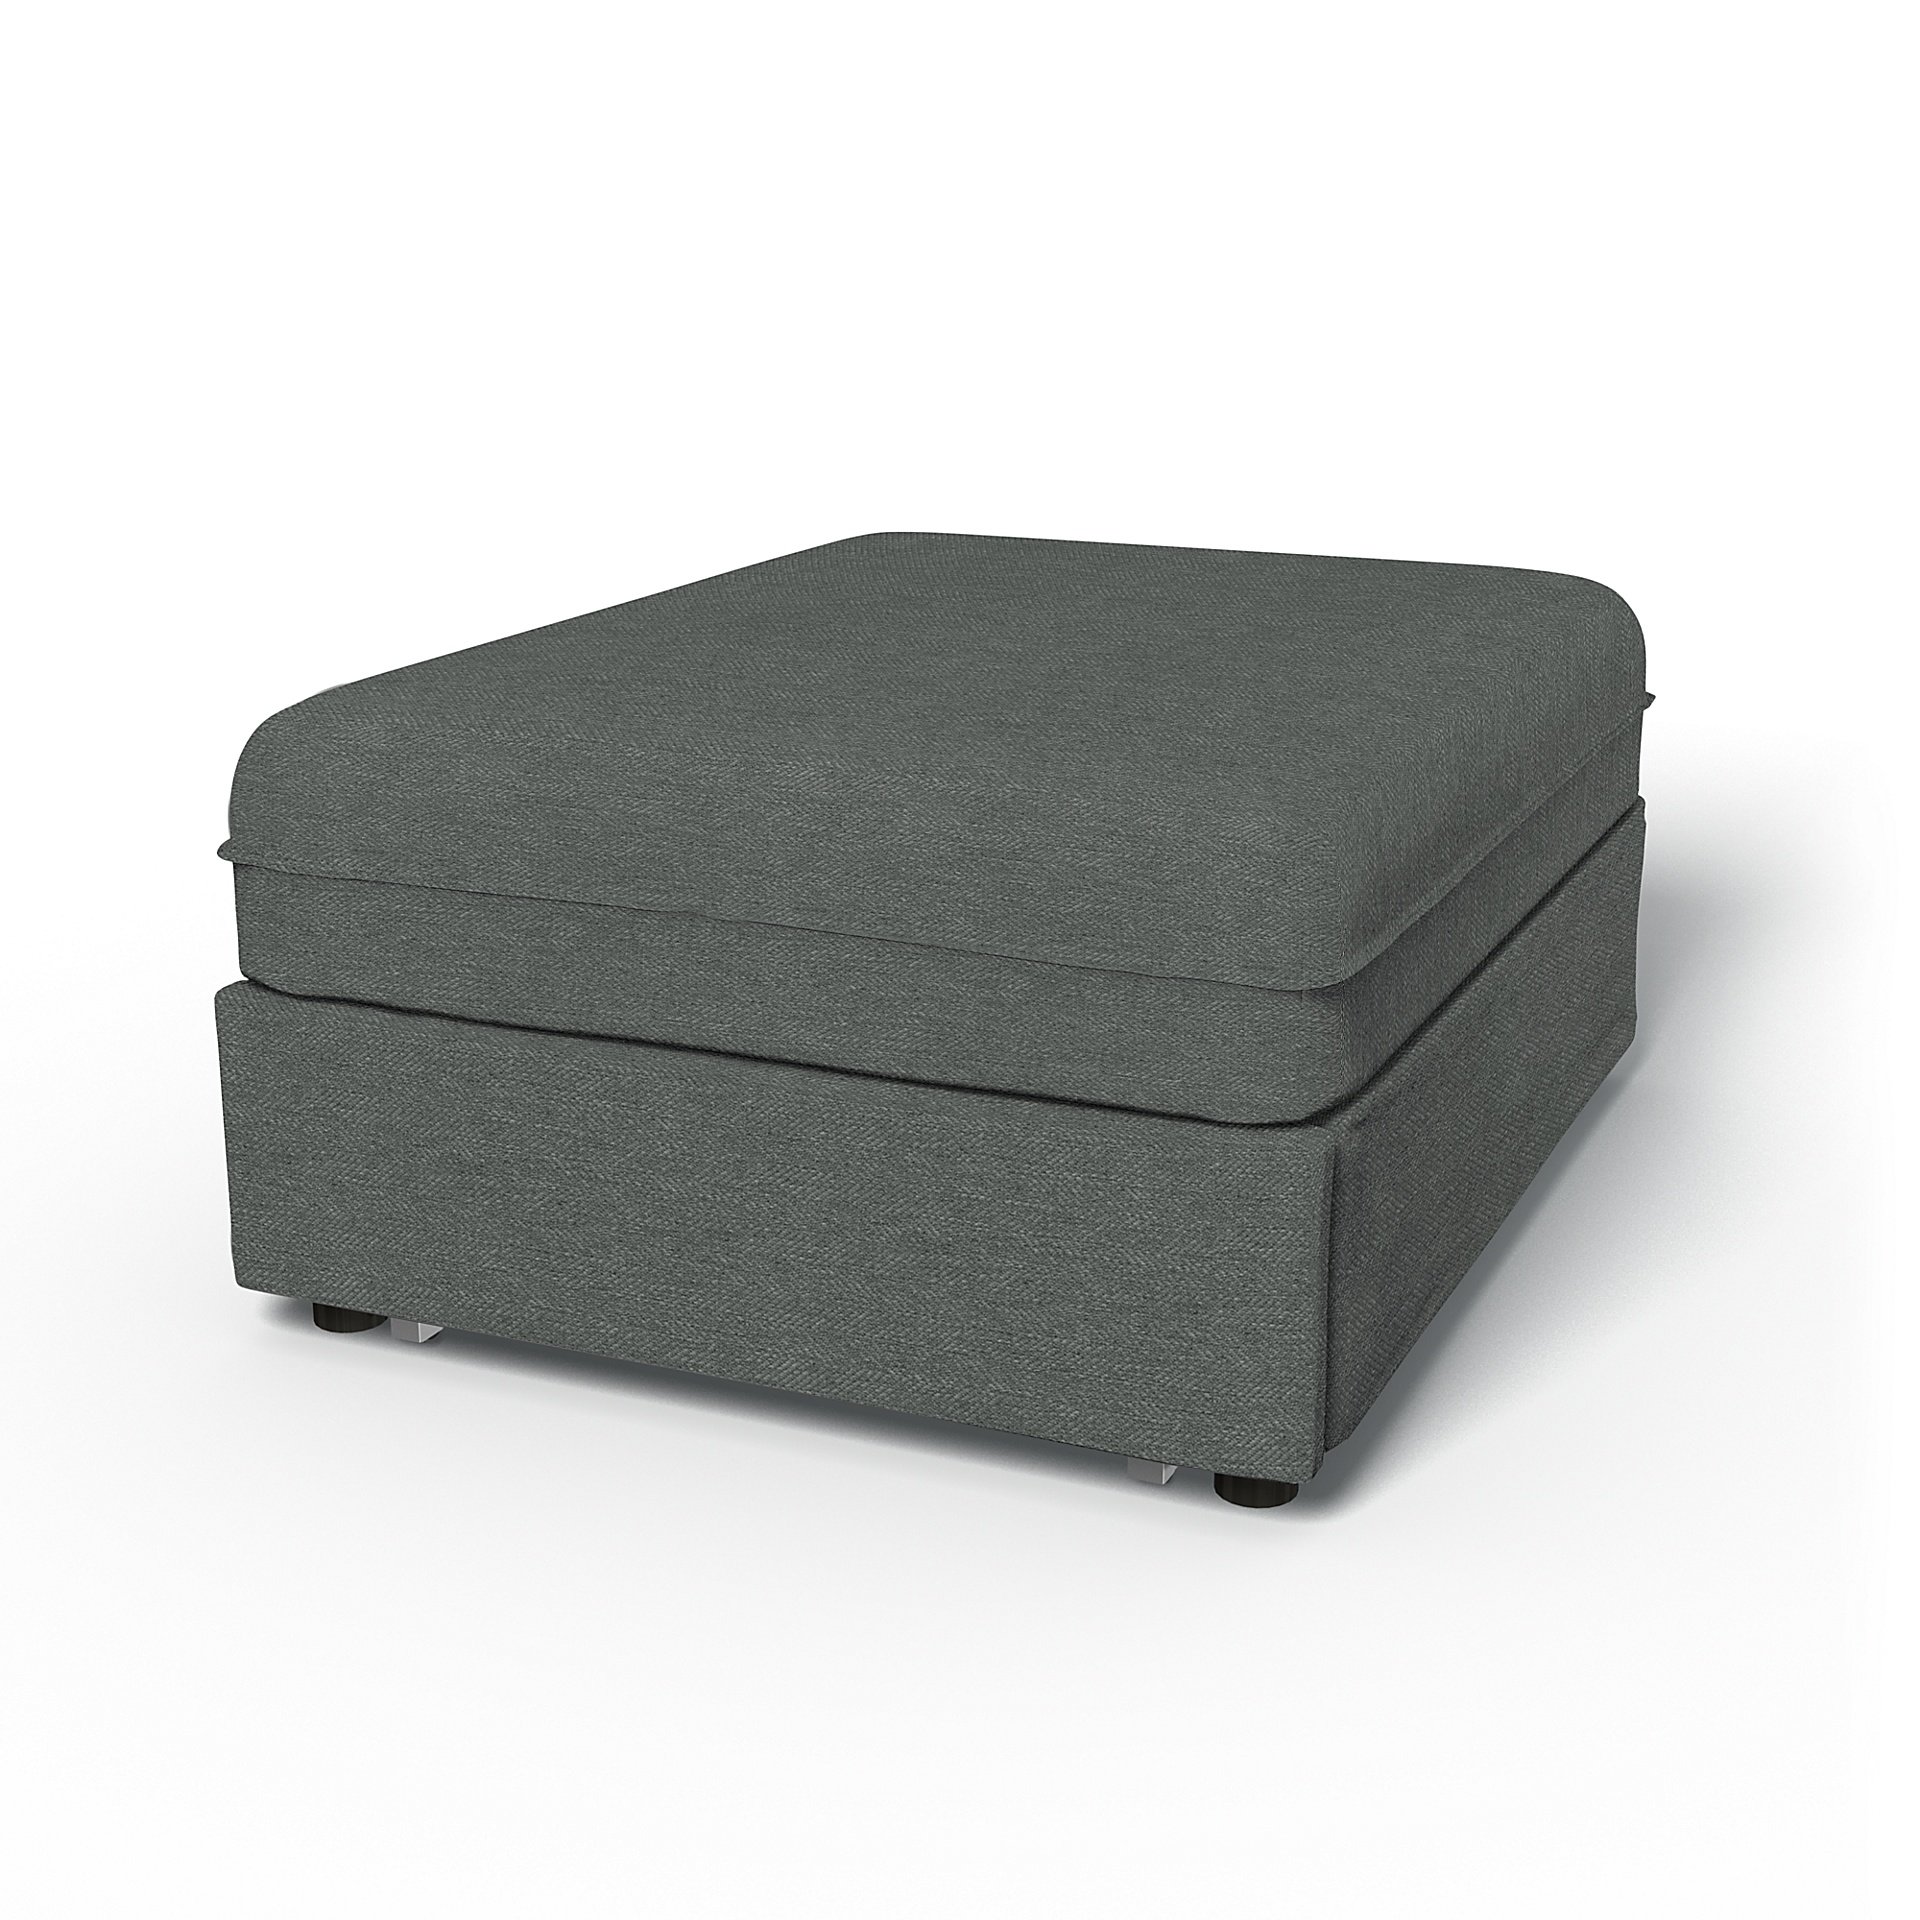 IKEA - Vallentuna Seat Module with Sofa Bed Cover 80x100cm 32x39in, Laurel, Boucle & Texture - Bemz